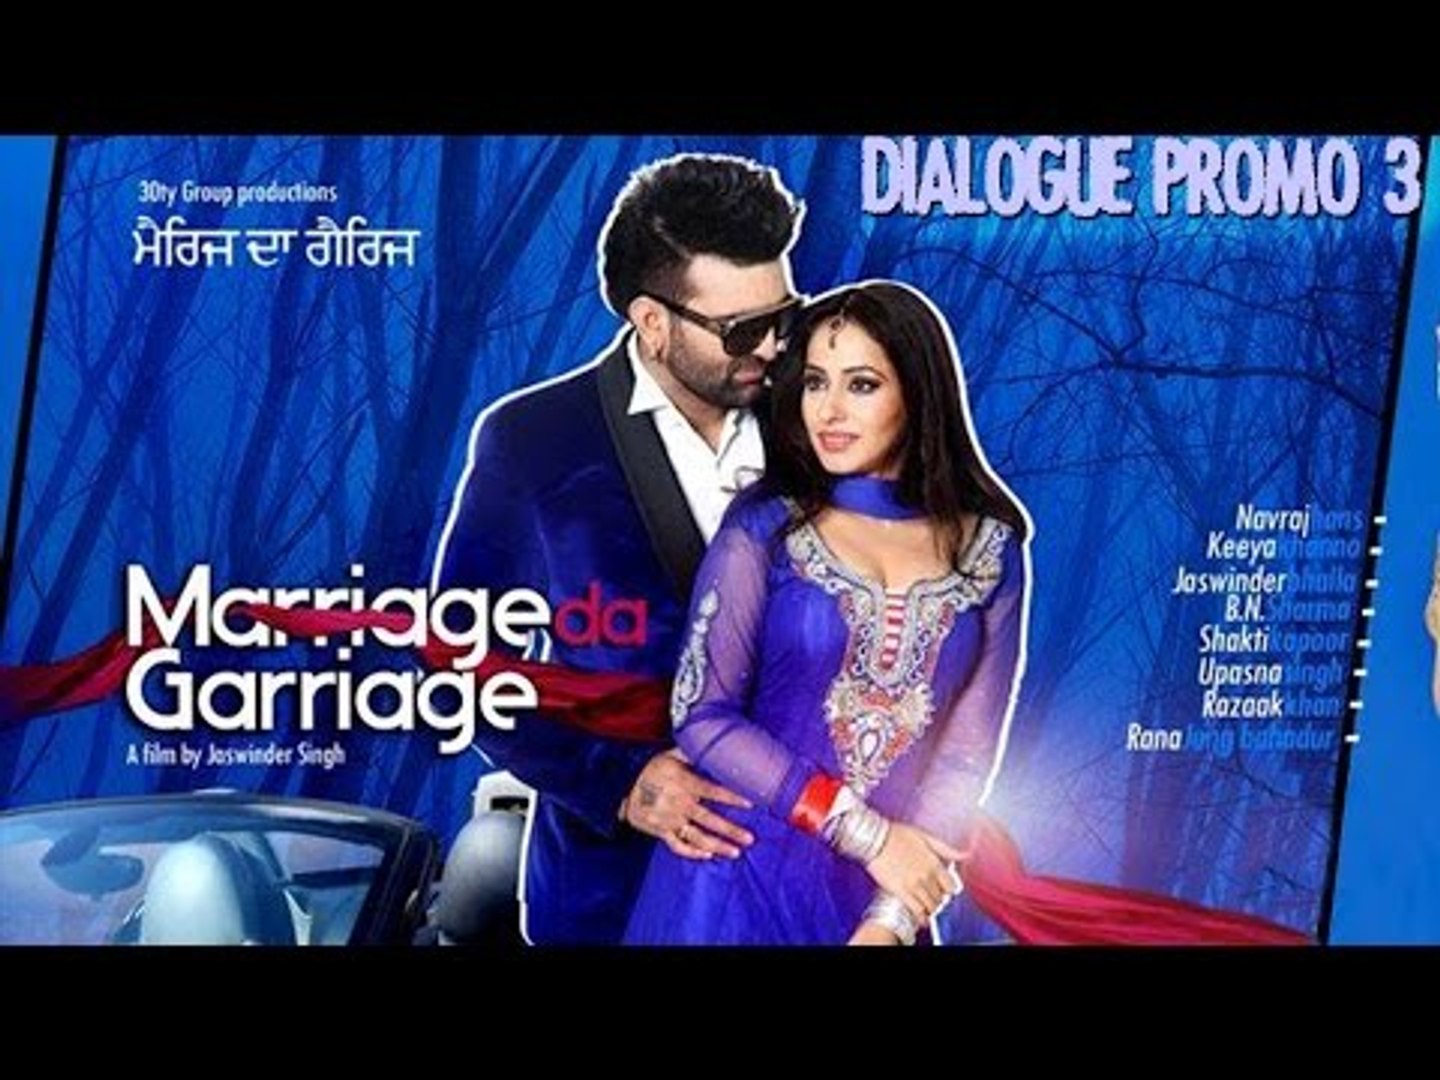 Marriage Da Garriage | Dialogue Promo 3 - video Dailymotion